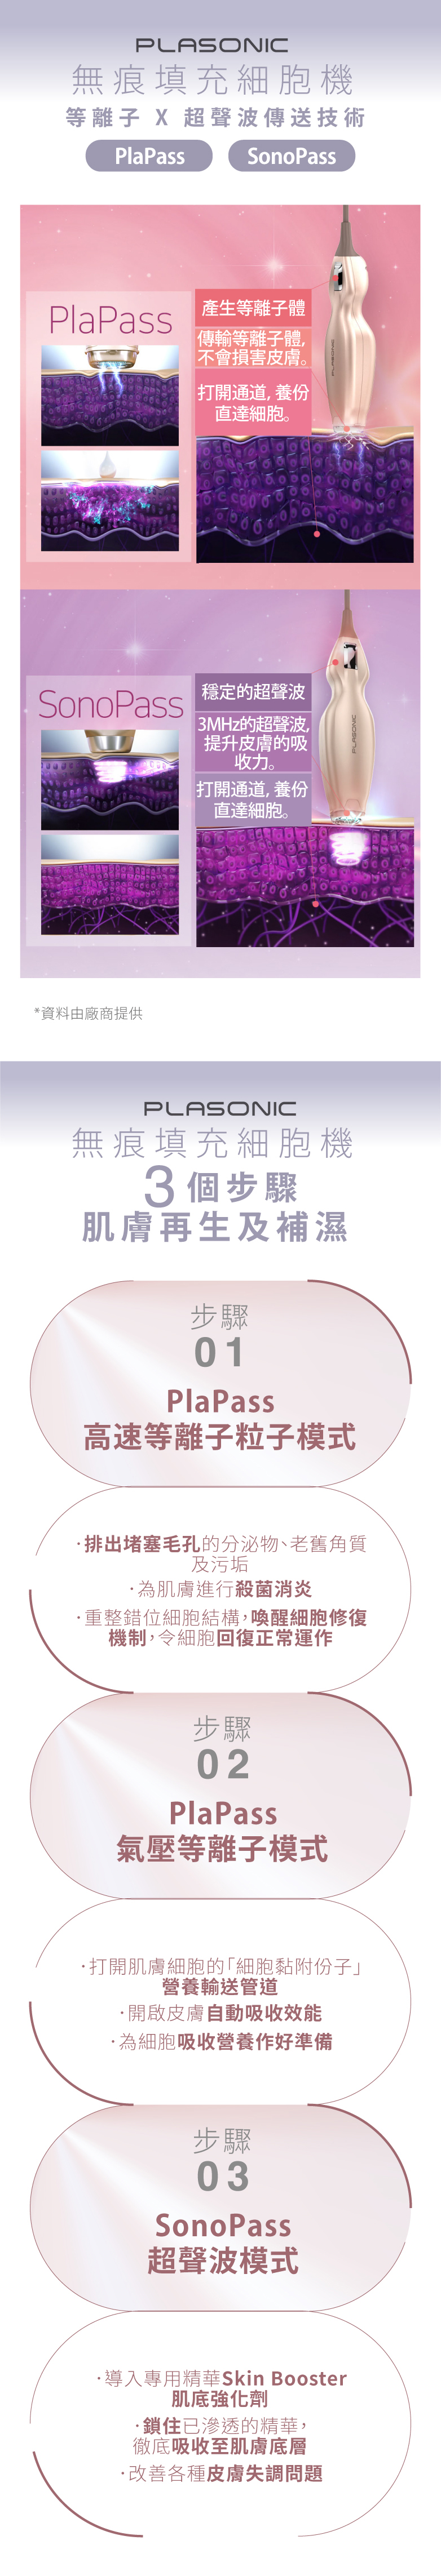 20230808_RB_Plasonic P2P_ec app version_wc-01_2.jpg